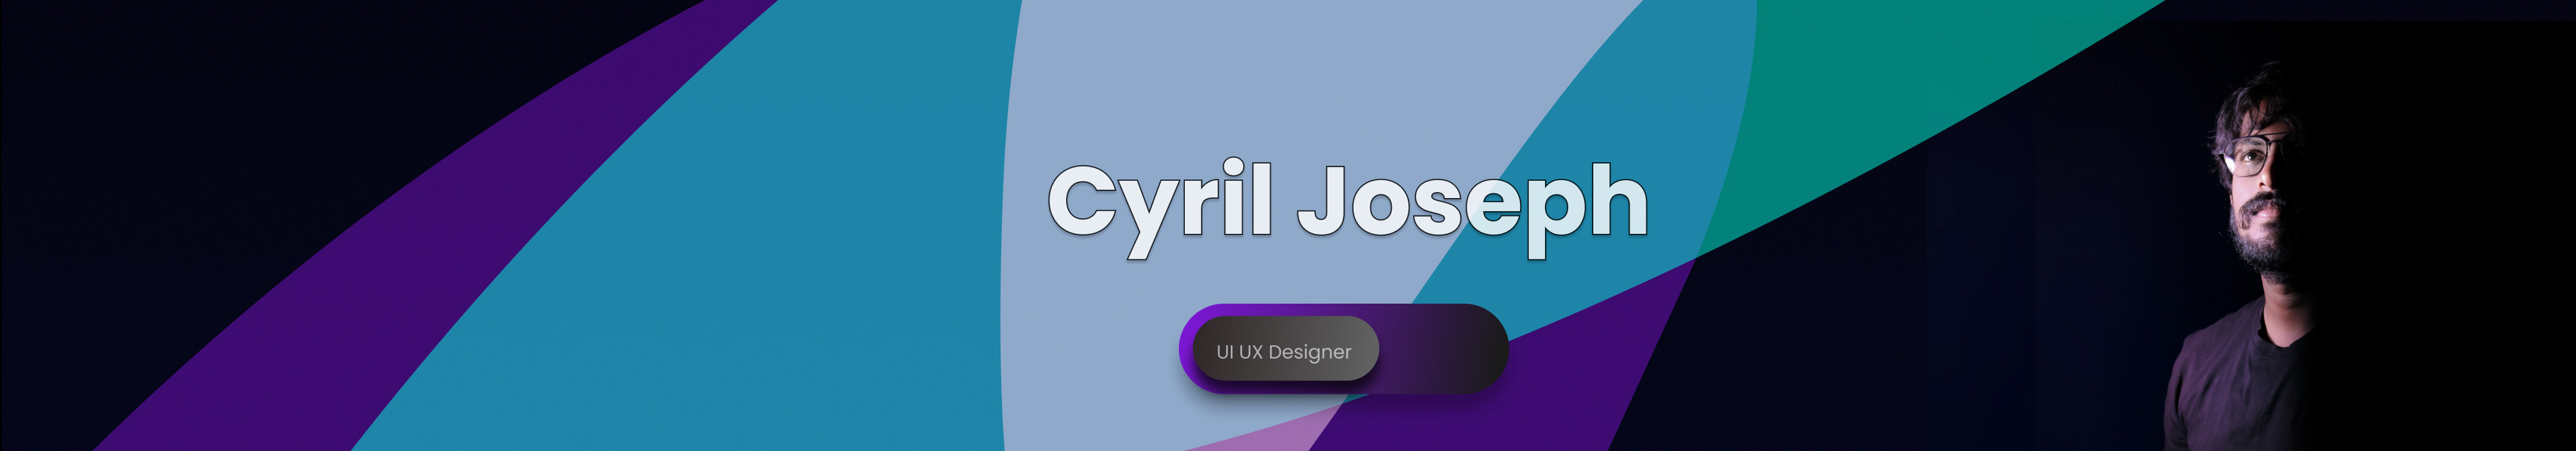 Cyril Joseph's profile banner